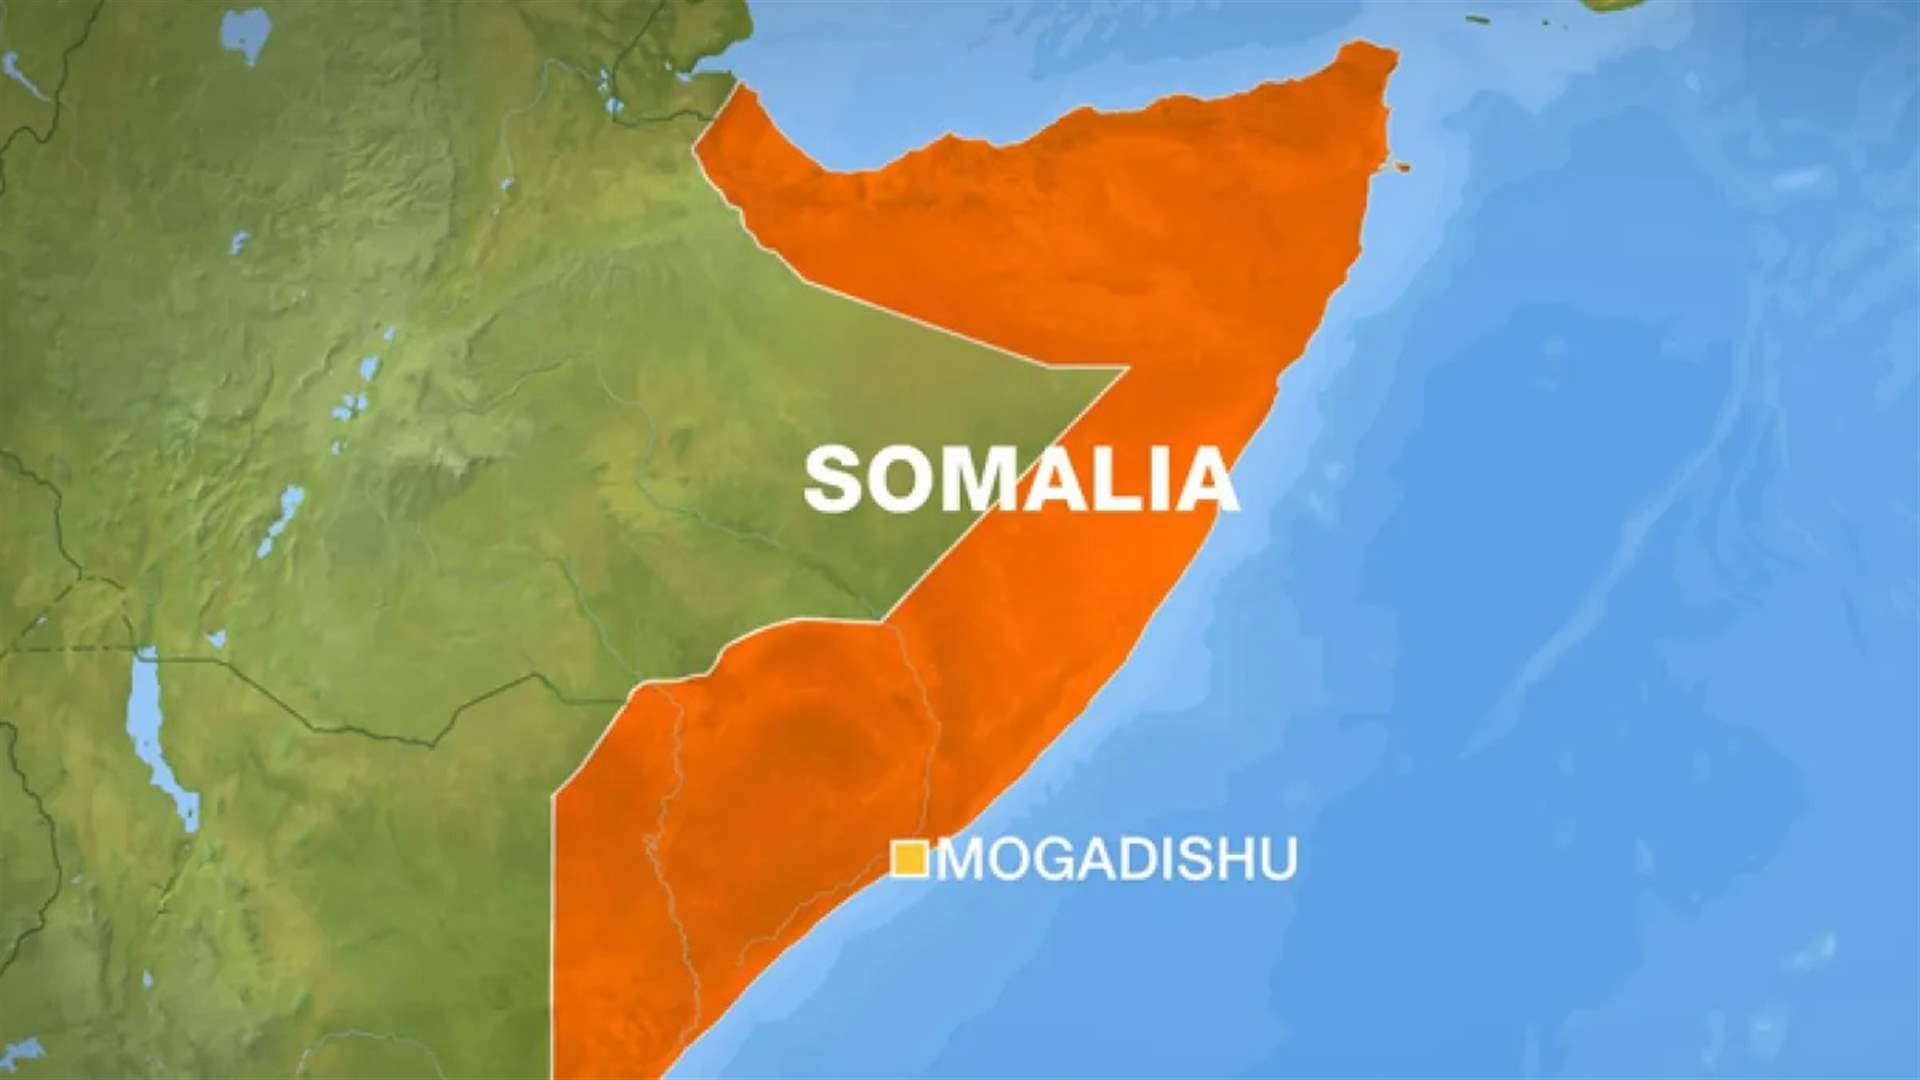 Seven killed in Mogadishu beach attack: Police says